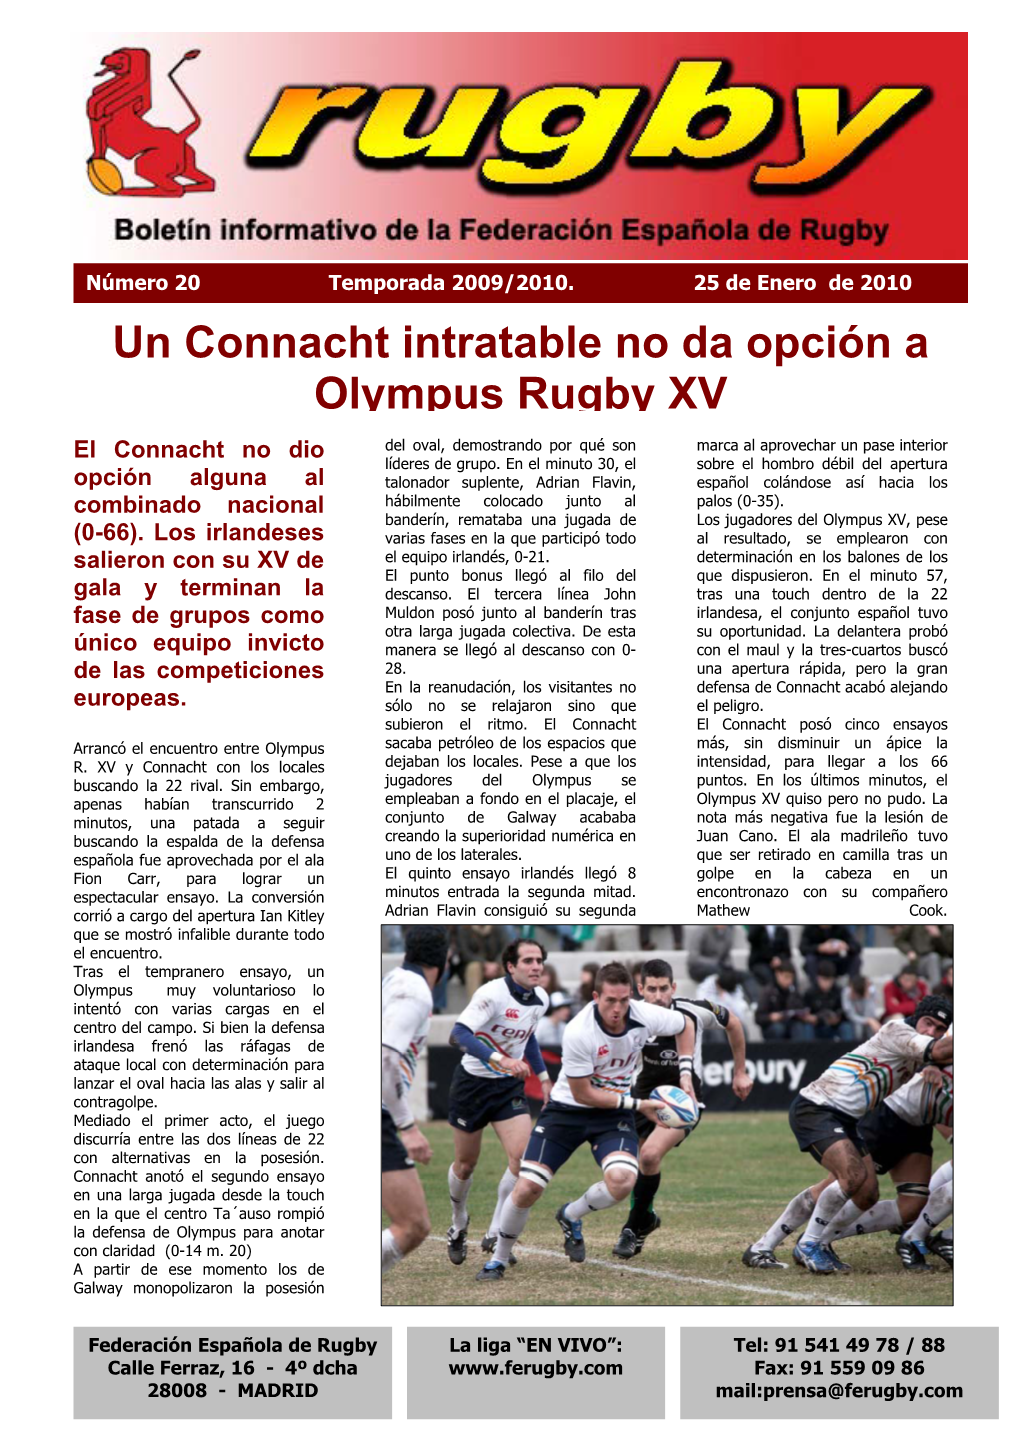 Un Connacht Intratable No Da Opción a Olympus Rugby XV